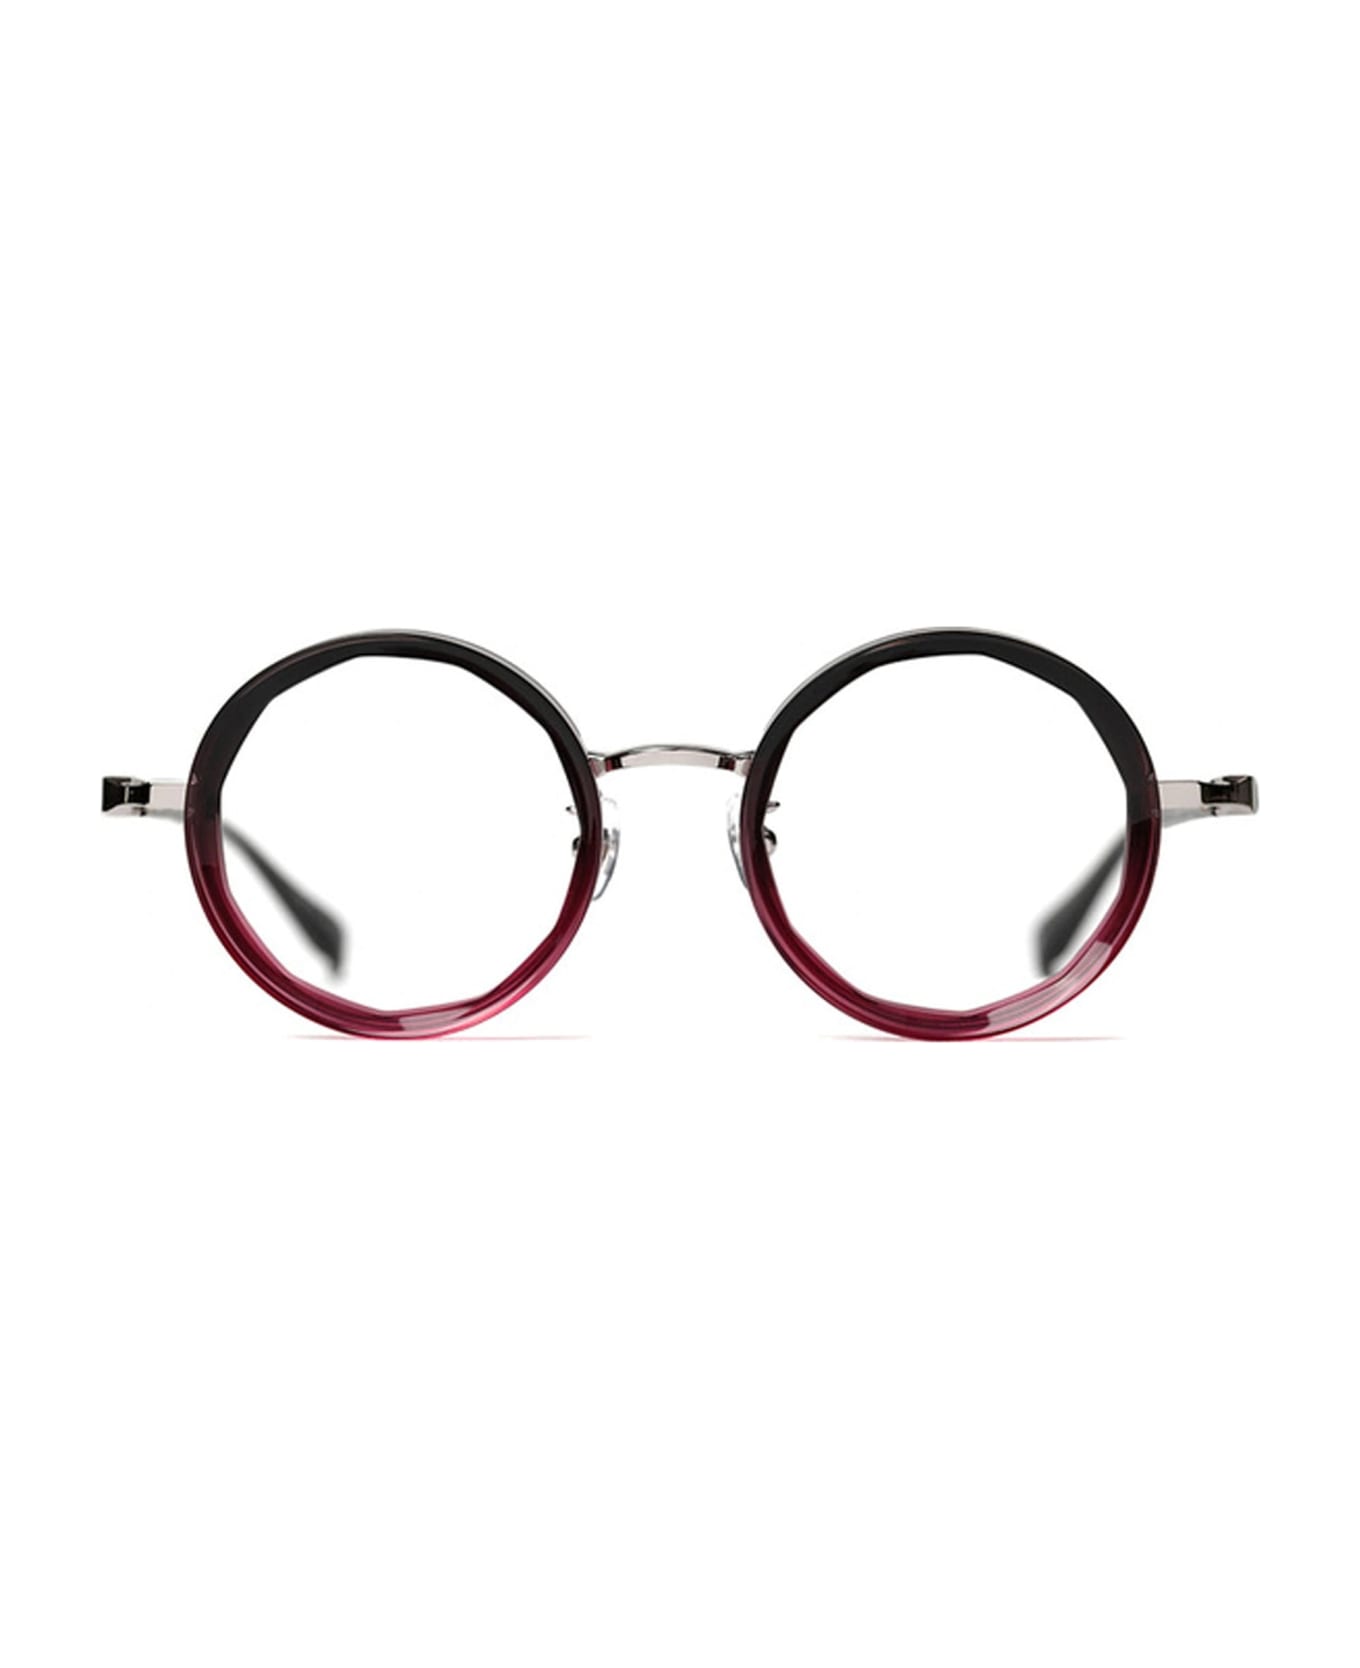 FACTORY900 Rf-058 - Gray / Red Purple Glasses - gray/red アイウェア